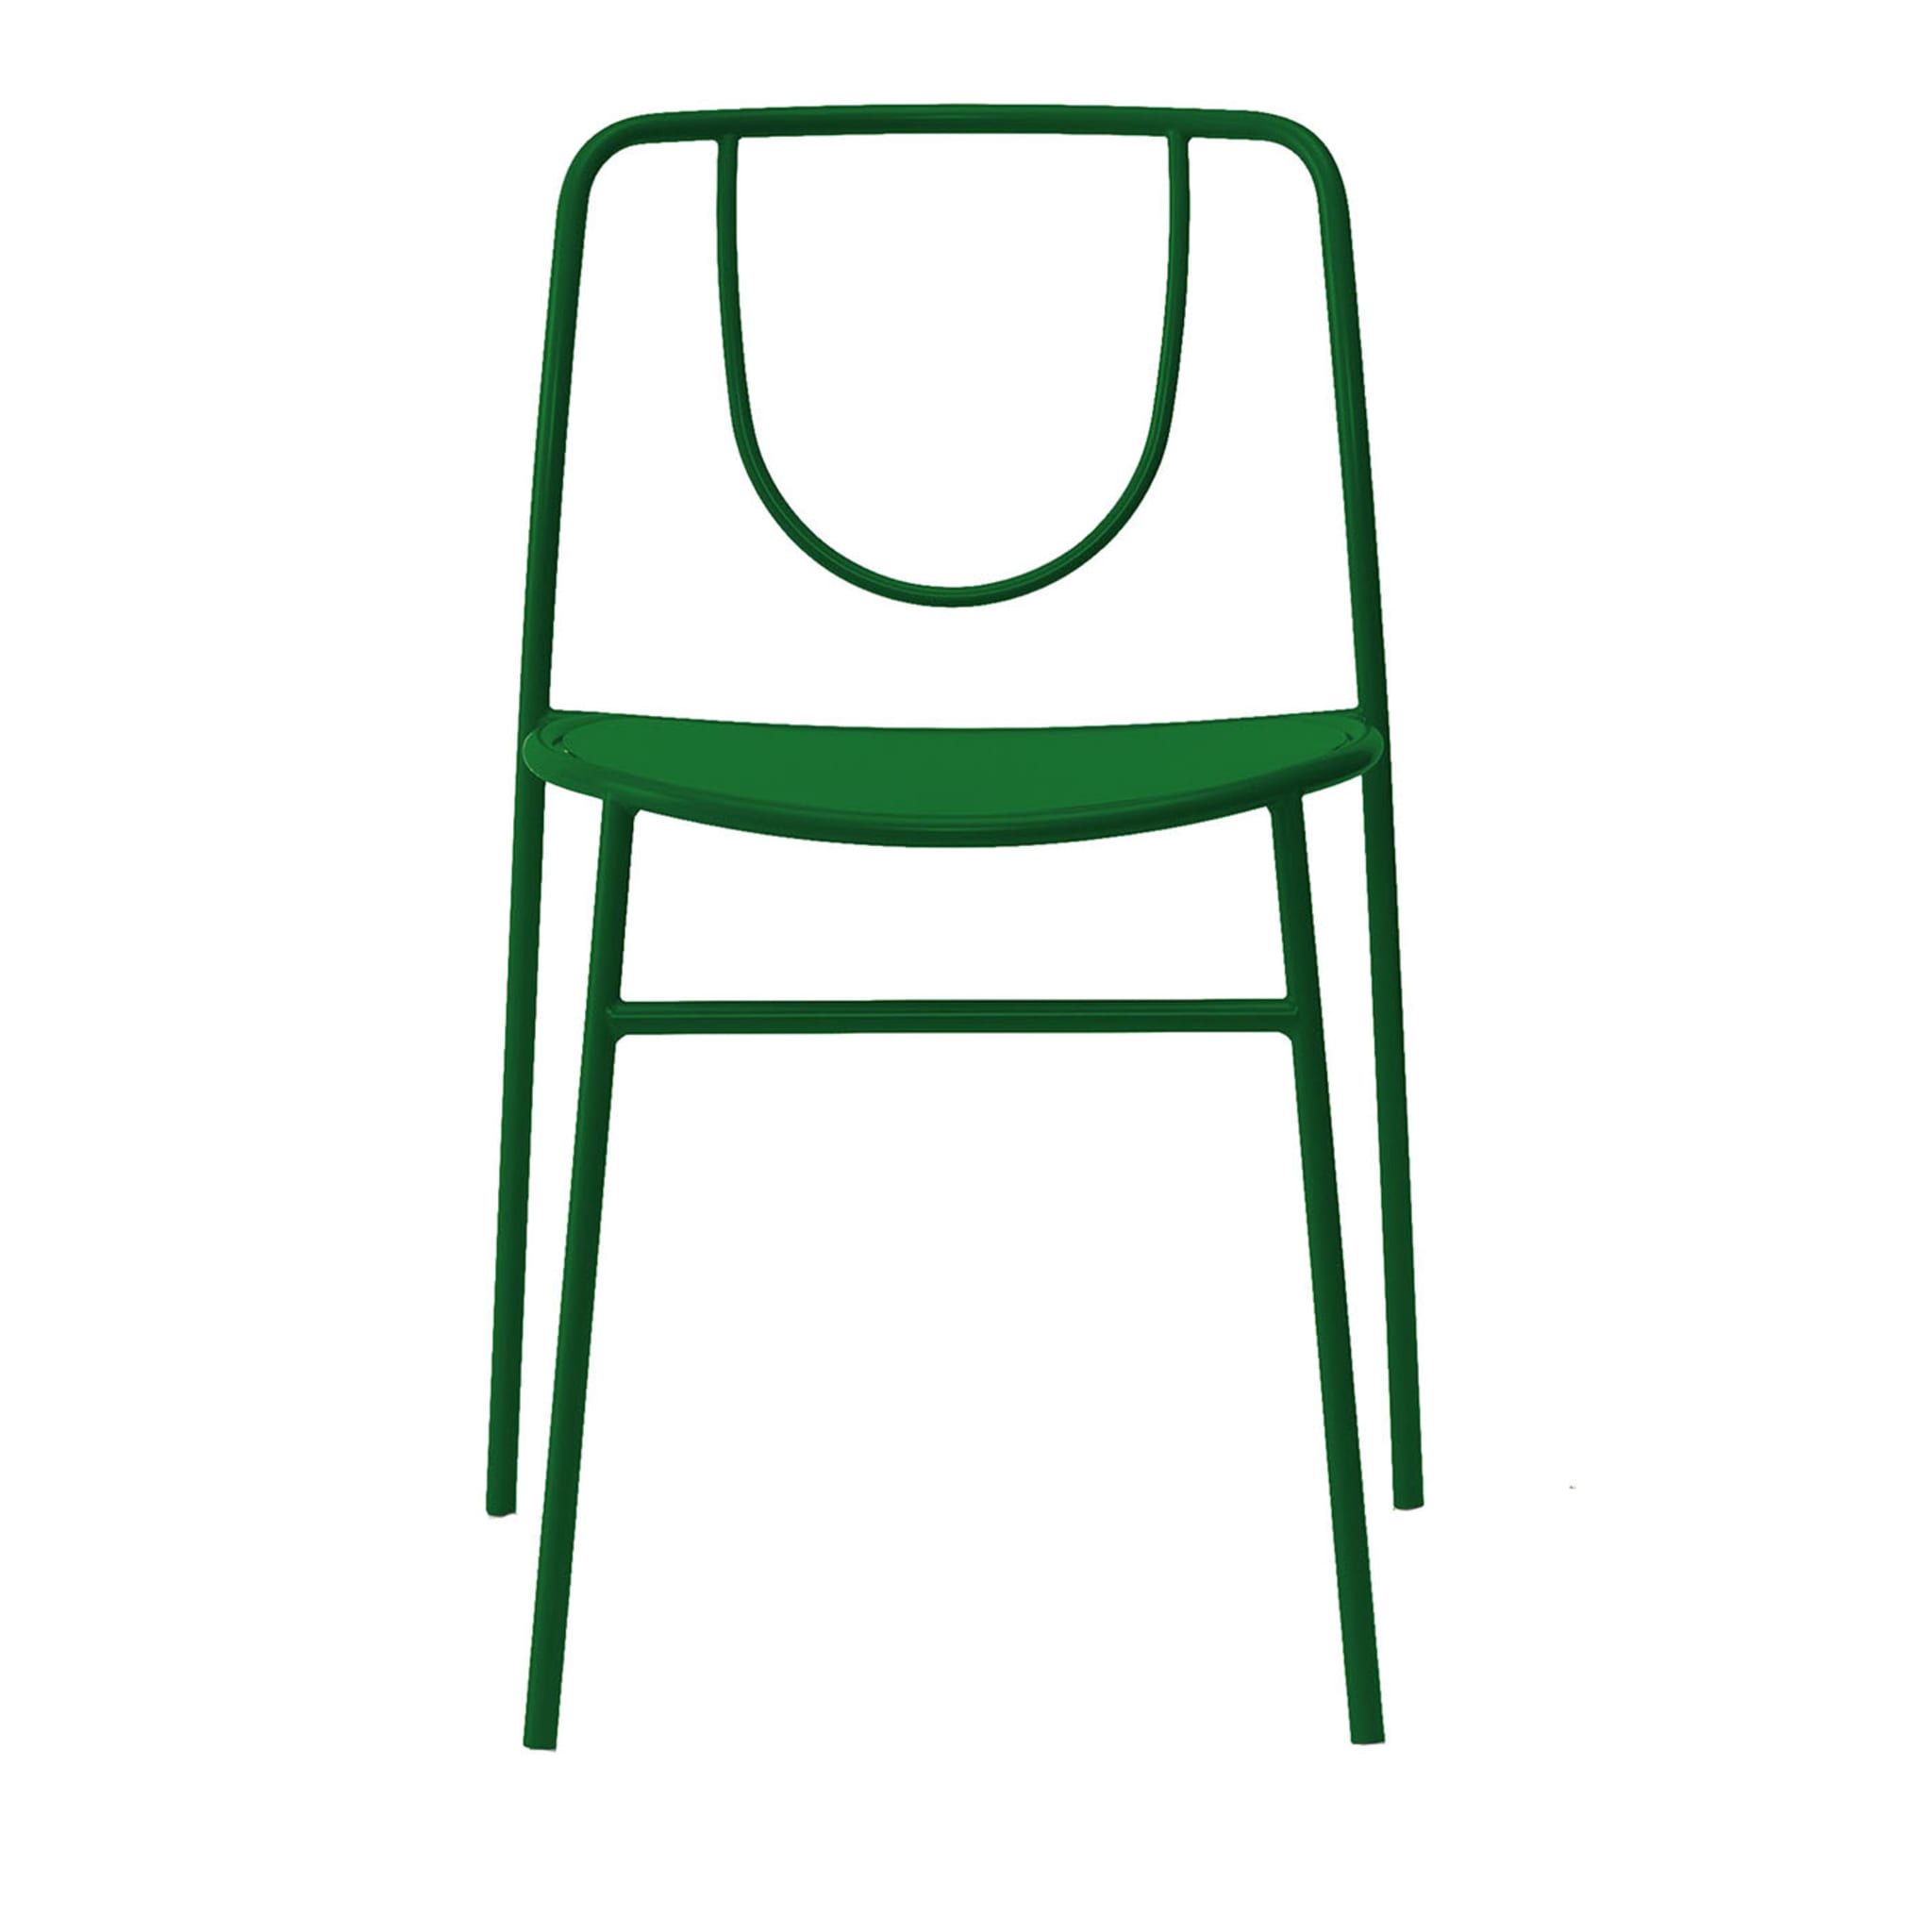 Centouno Green Chair by Atelier Nanni - Main view